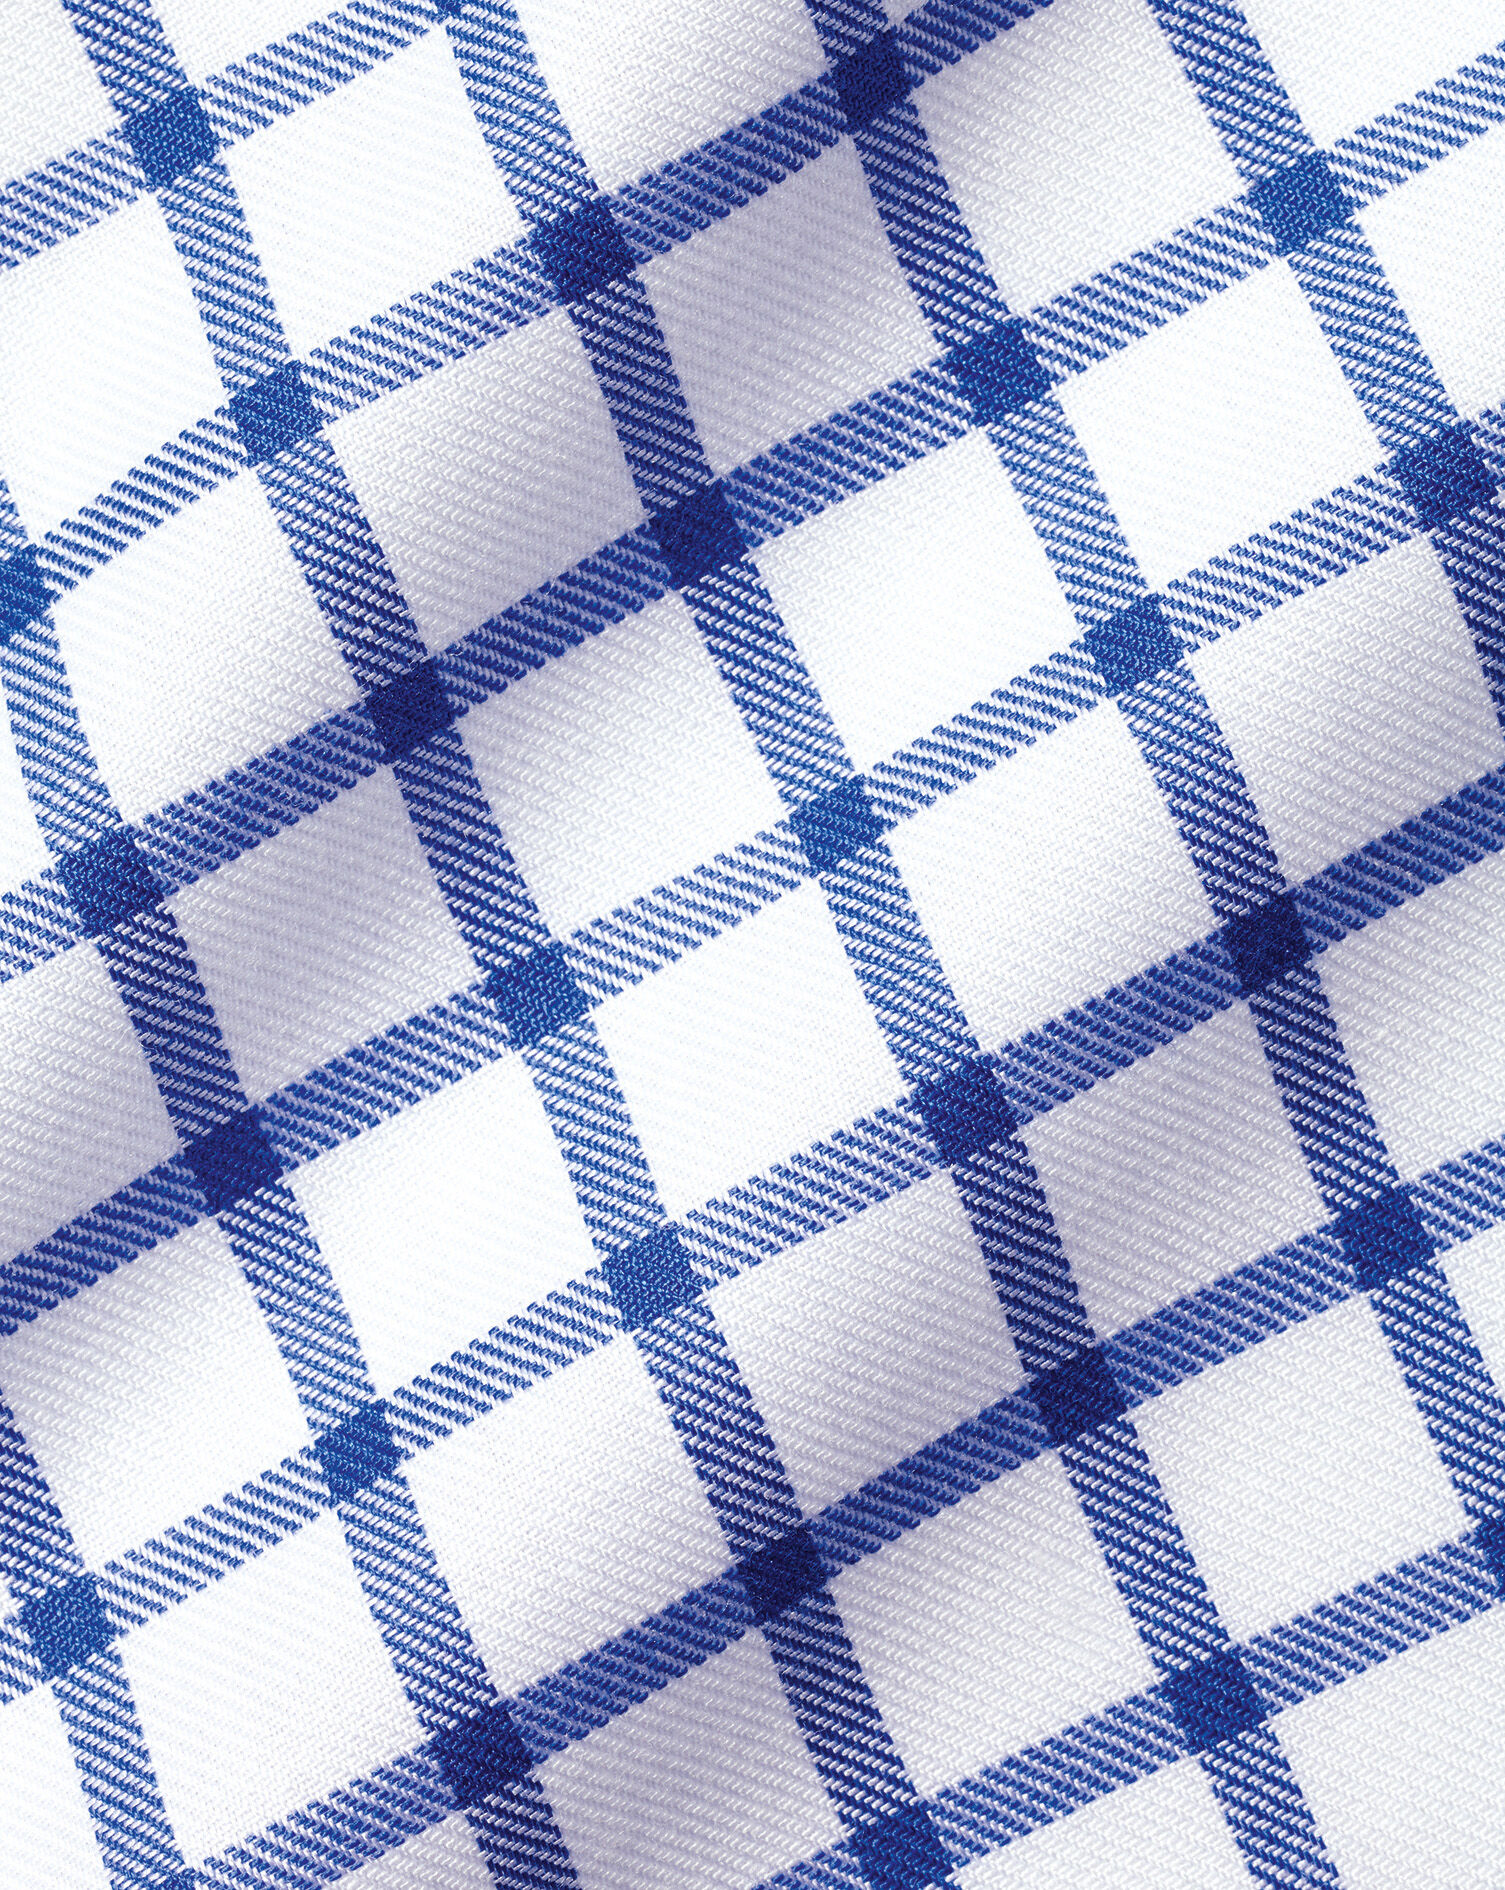 Non-Iron Twill Grid Check Shirt - Cobalt Blue | Charles Tyrwhitt